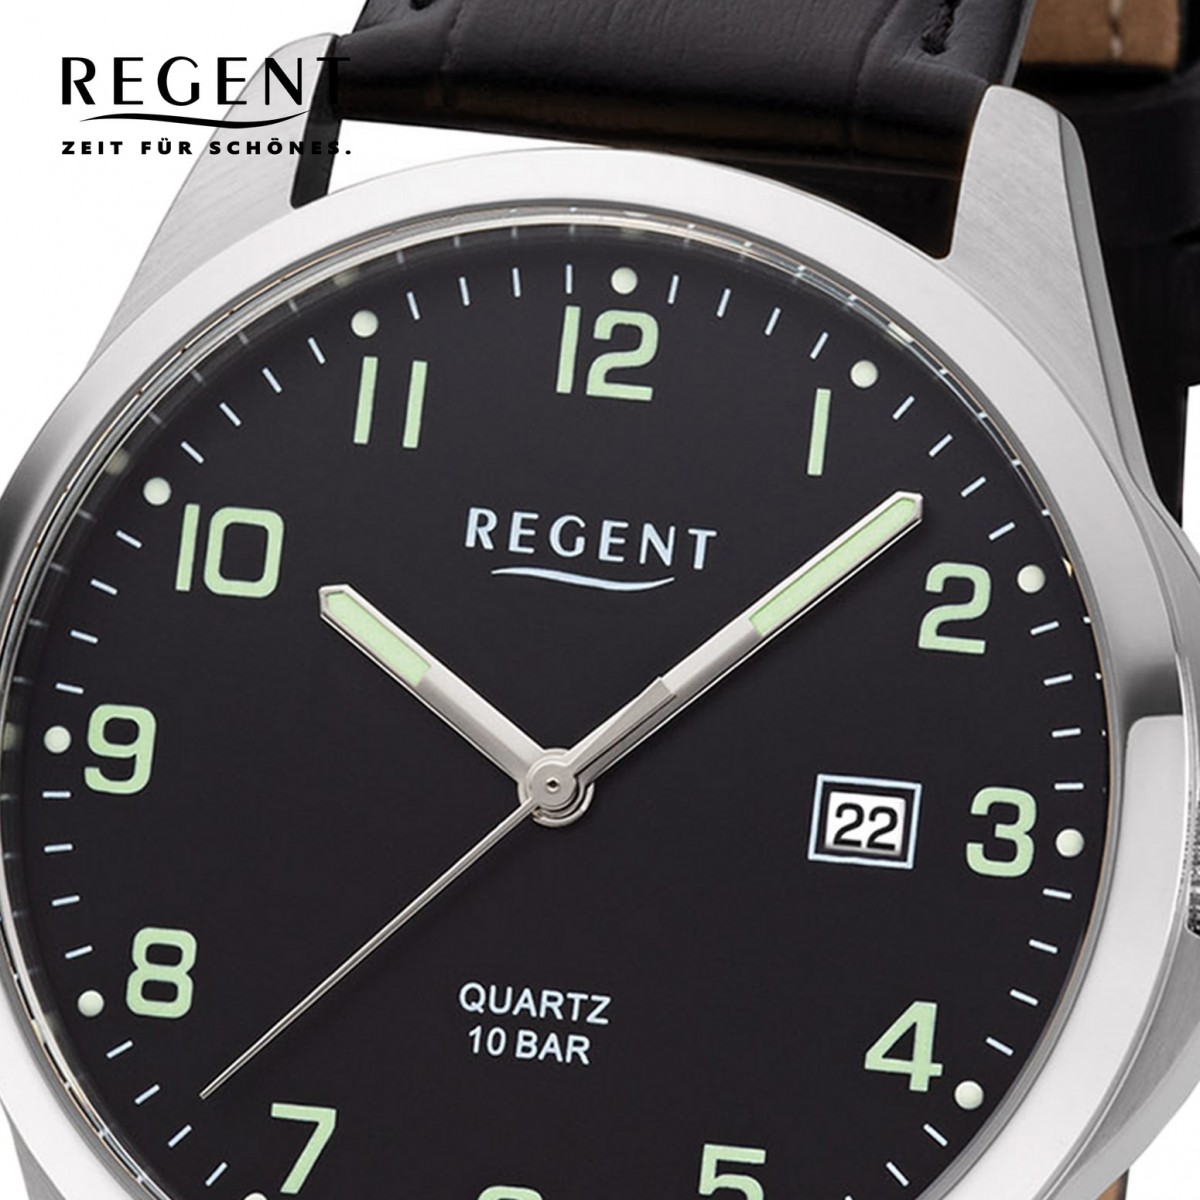 Herren Quarz-Uhr F-1227 Regent URF1227 Analog Armbanduhr Leder schwarz